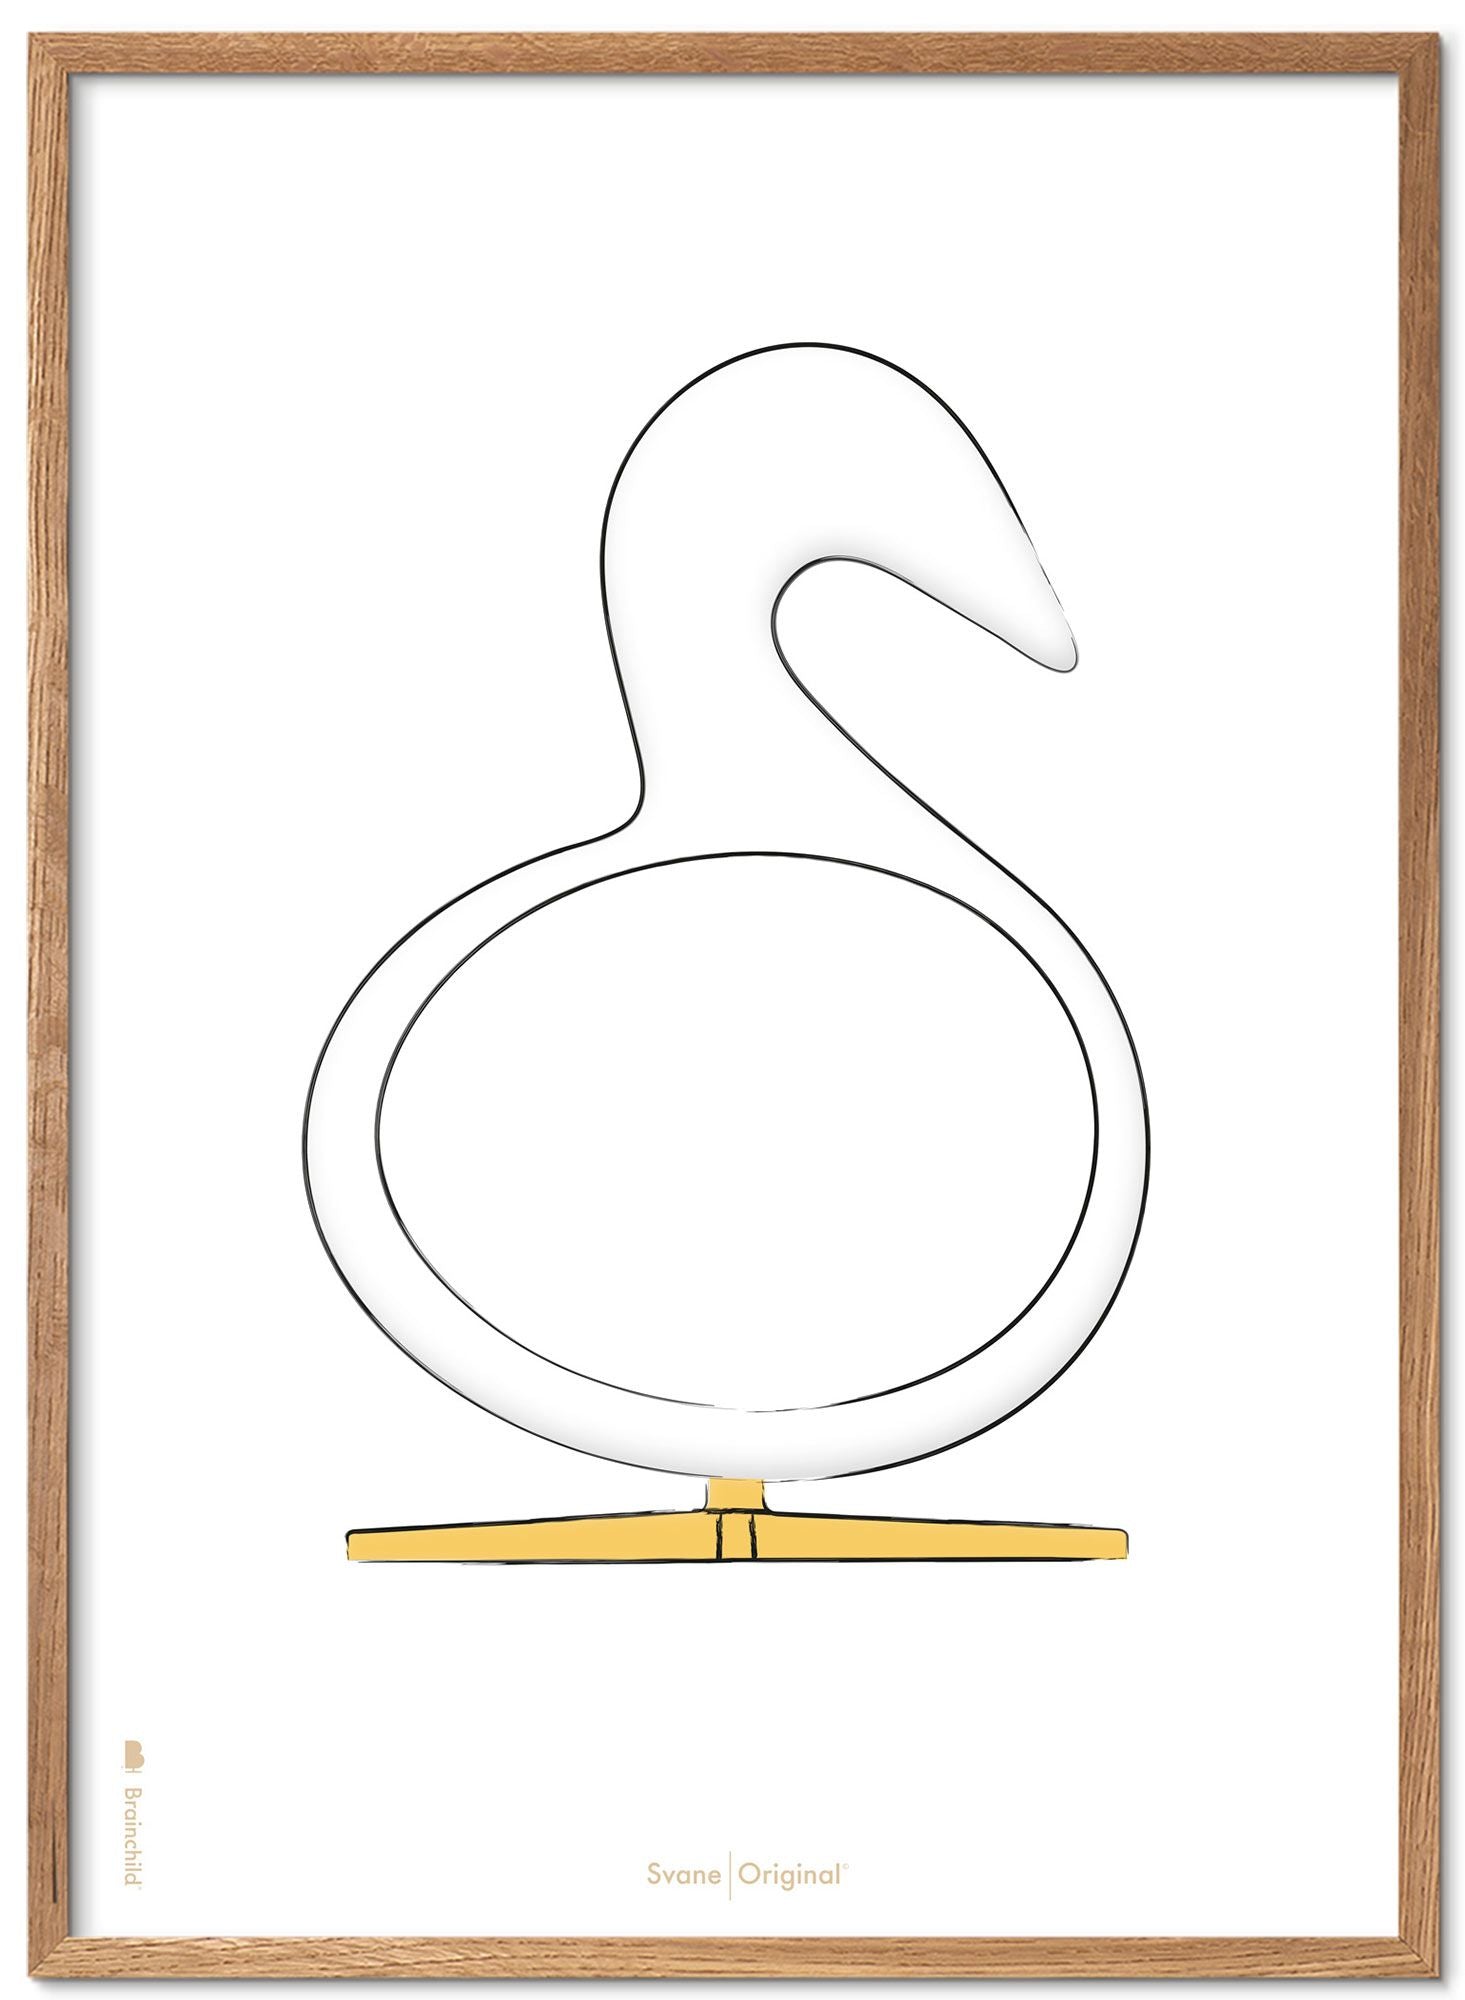 Brainchild Swan Design Sketch Poster Frame Made Of Light Wood 50x70 Cm, White Background